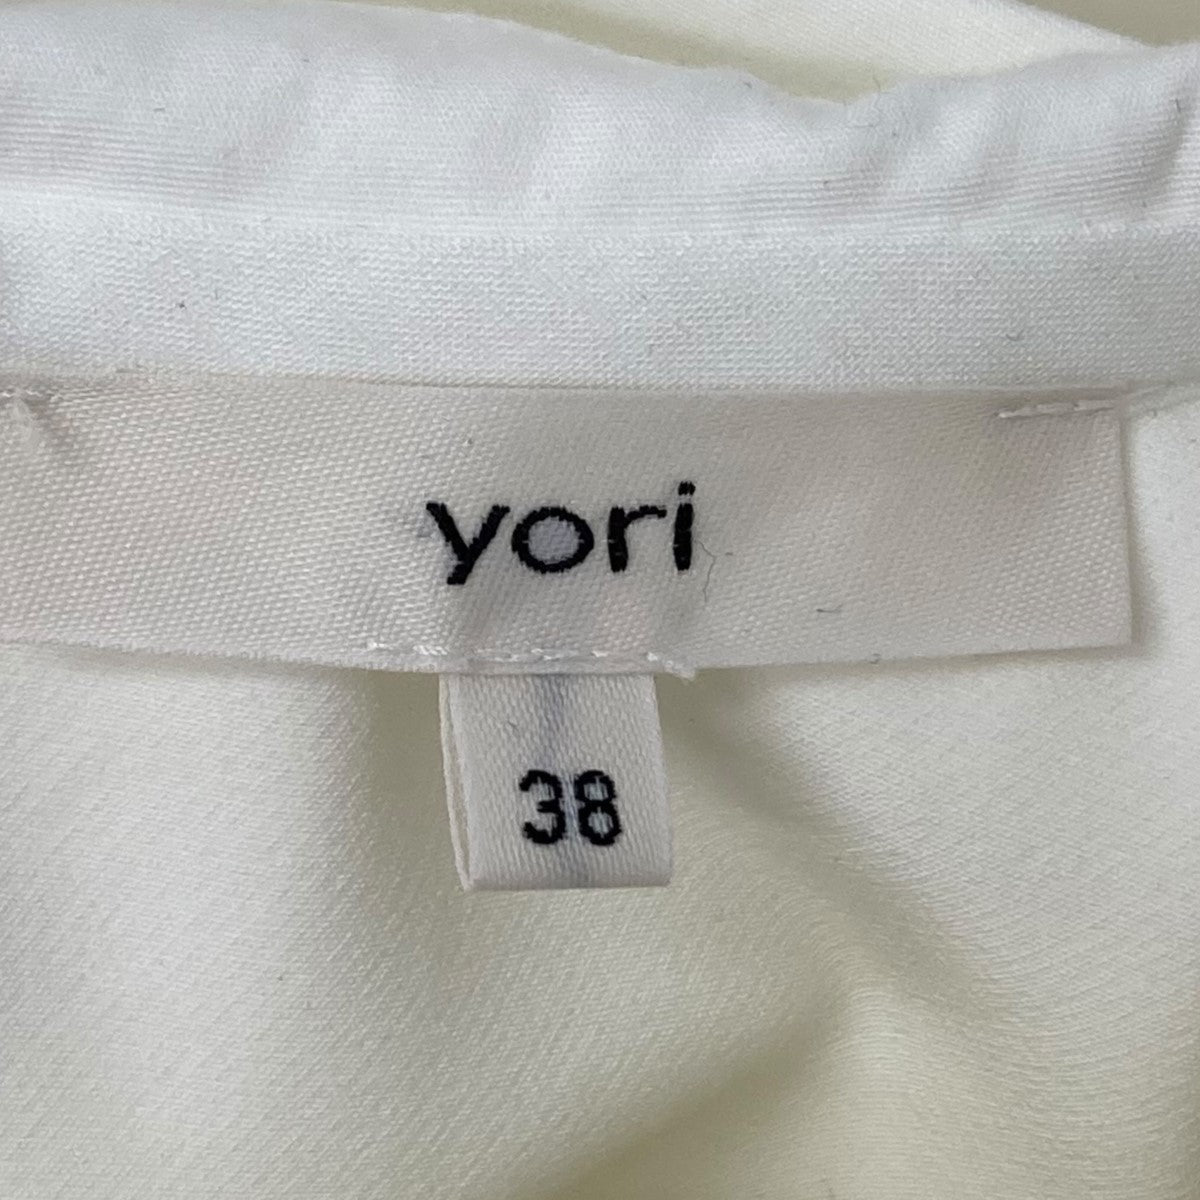 yori(ヨリ) ワイドカラーストレッチブラウス ホワイト サイズ:38 レディース シャツ 中古・古着